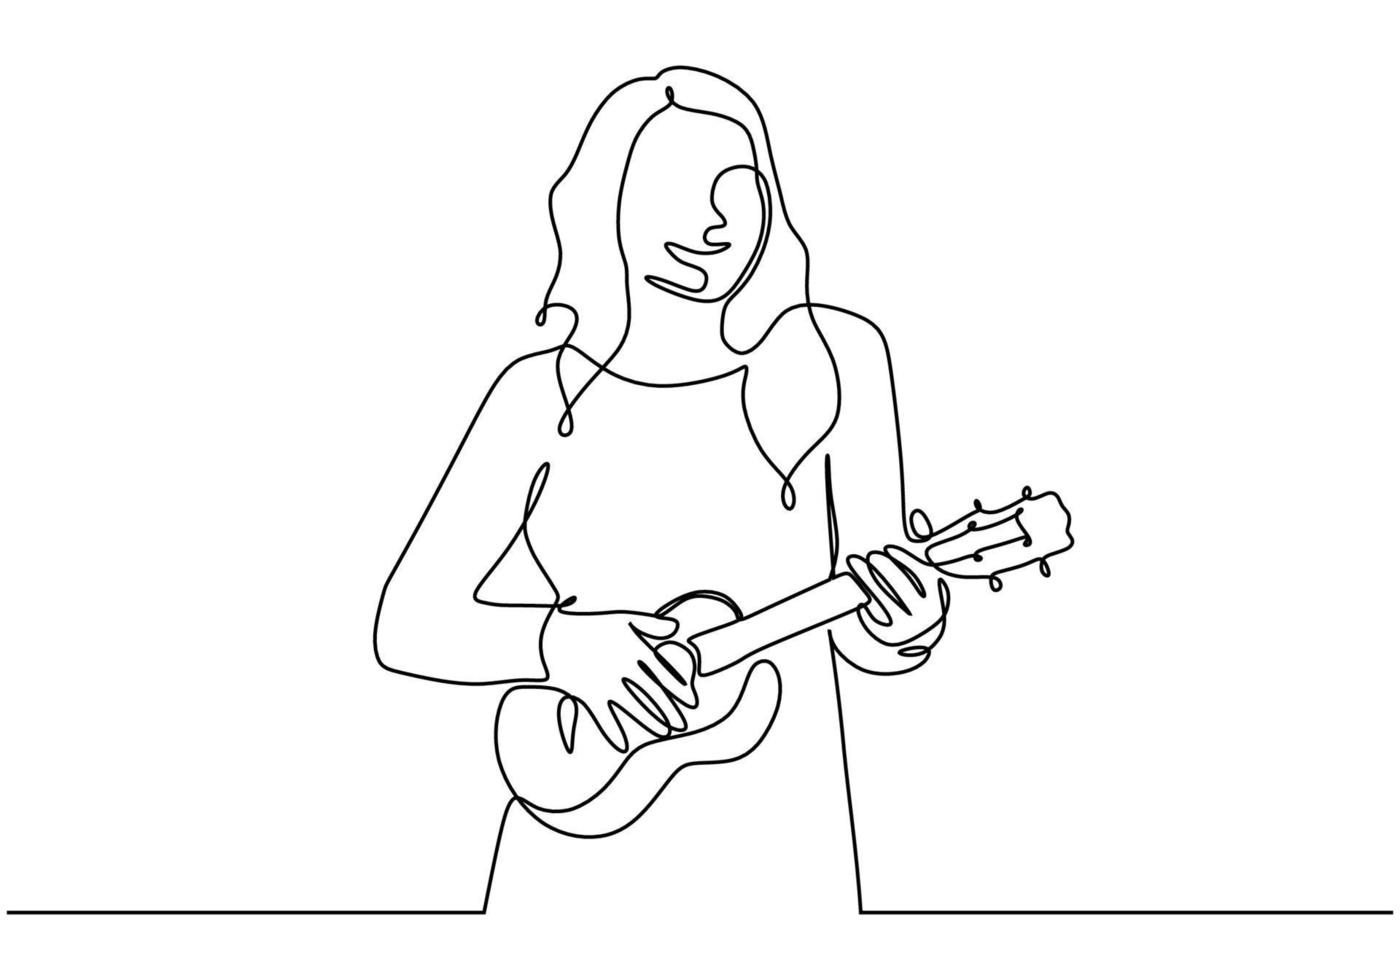 linda chica joven tocando el instrumento musical de cuerda de ukelele lineart. vector